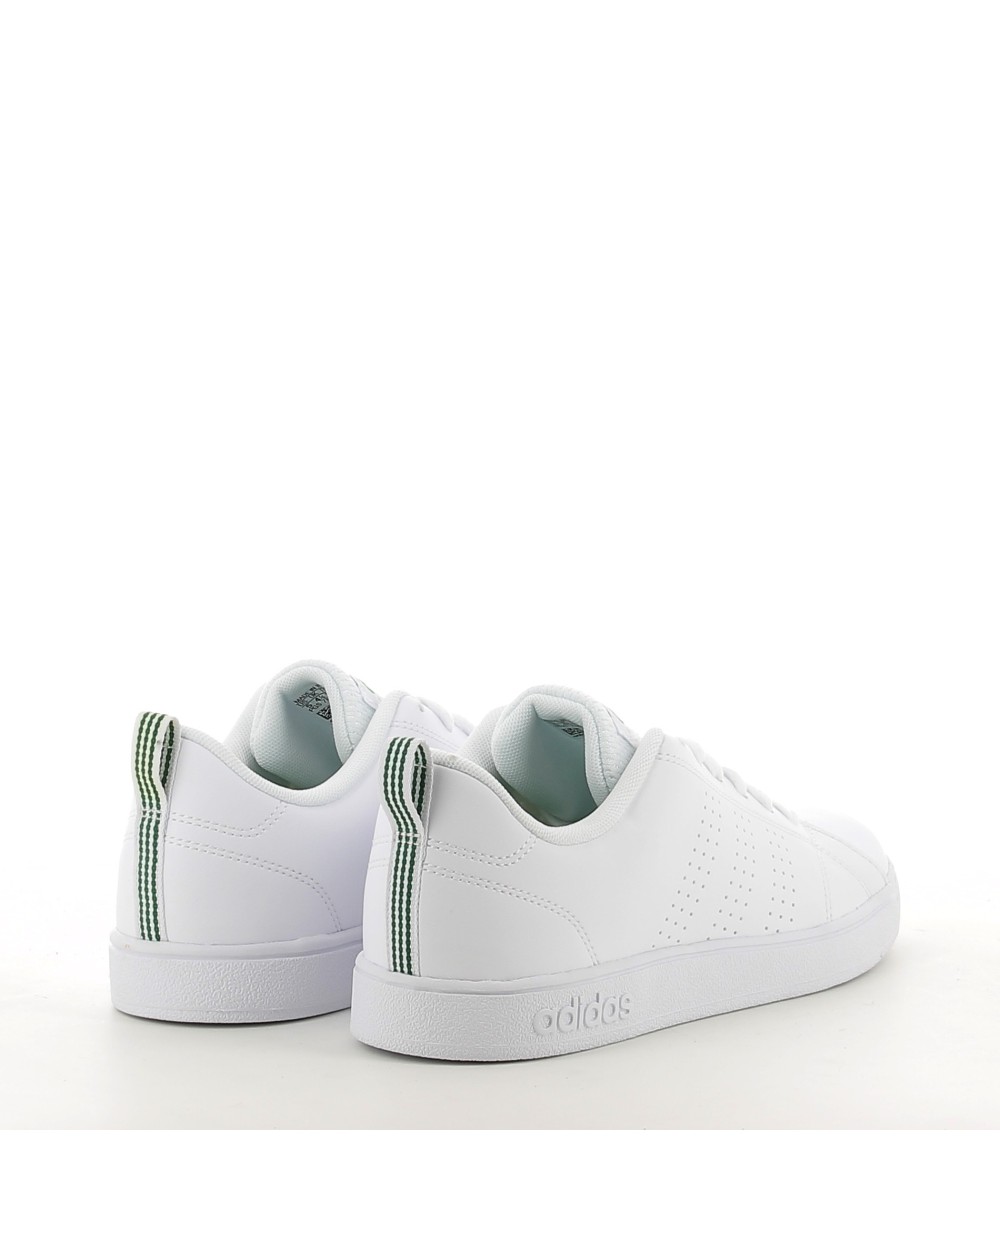 tuyo Impulso Nutrición Sneakers Adidas VS ADVANTAGE CLEAN blanco. Zapatos Obi